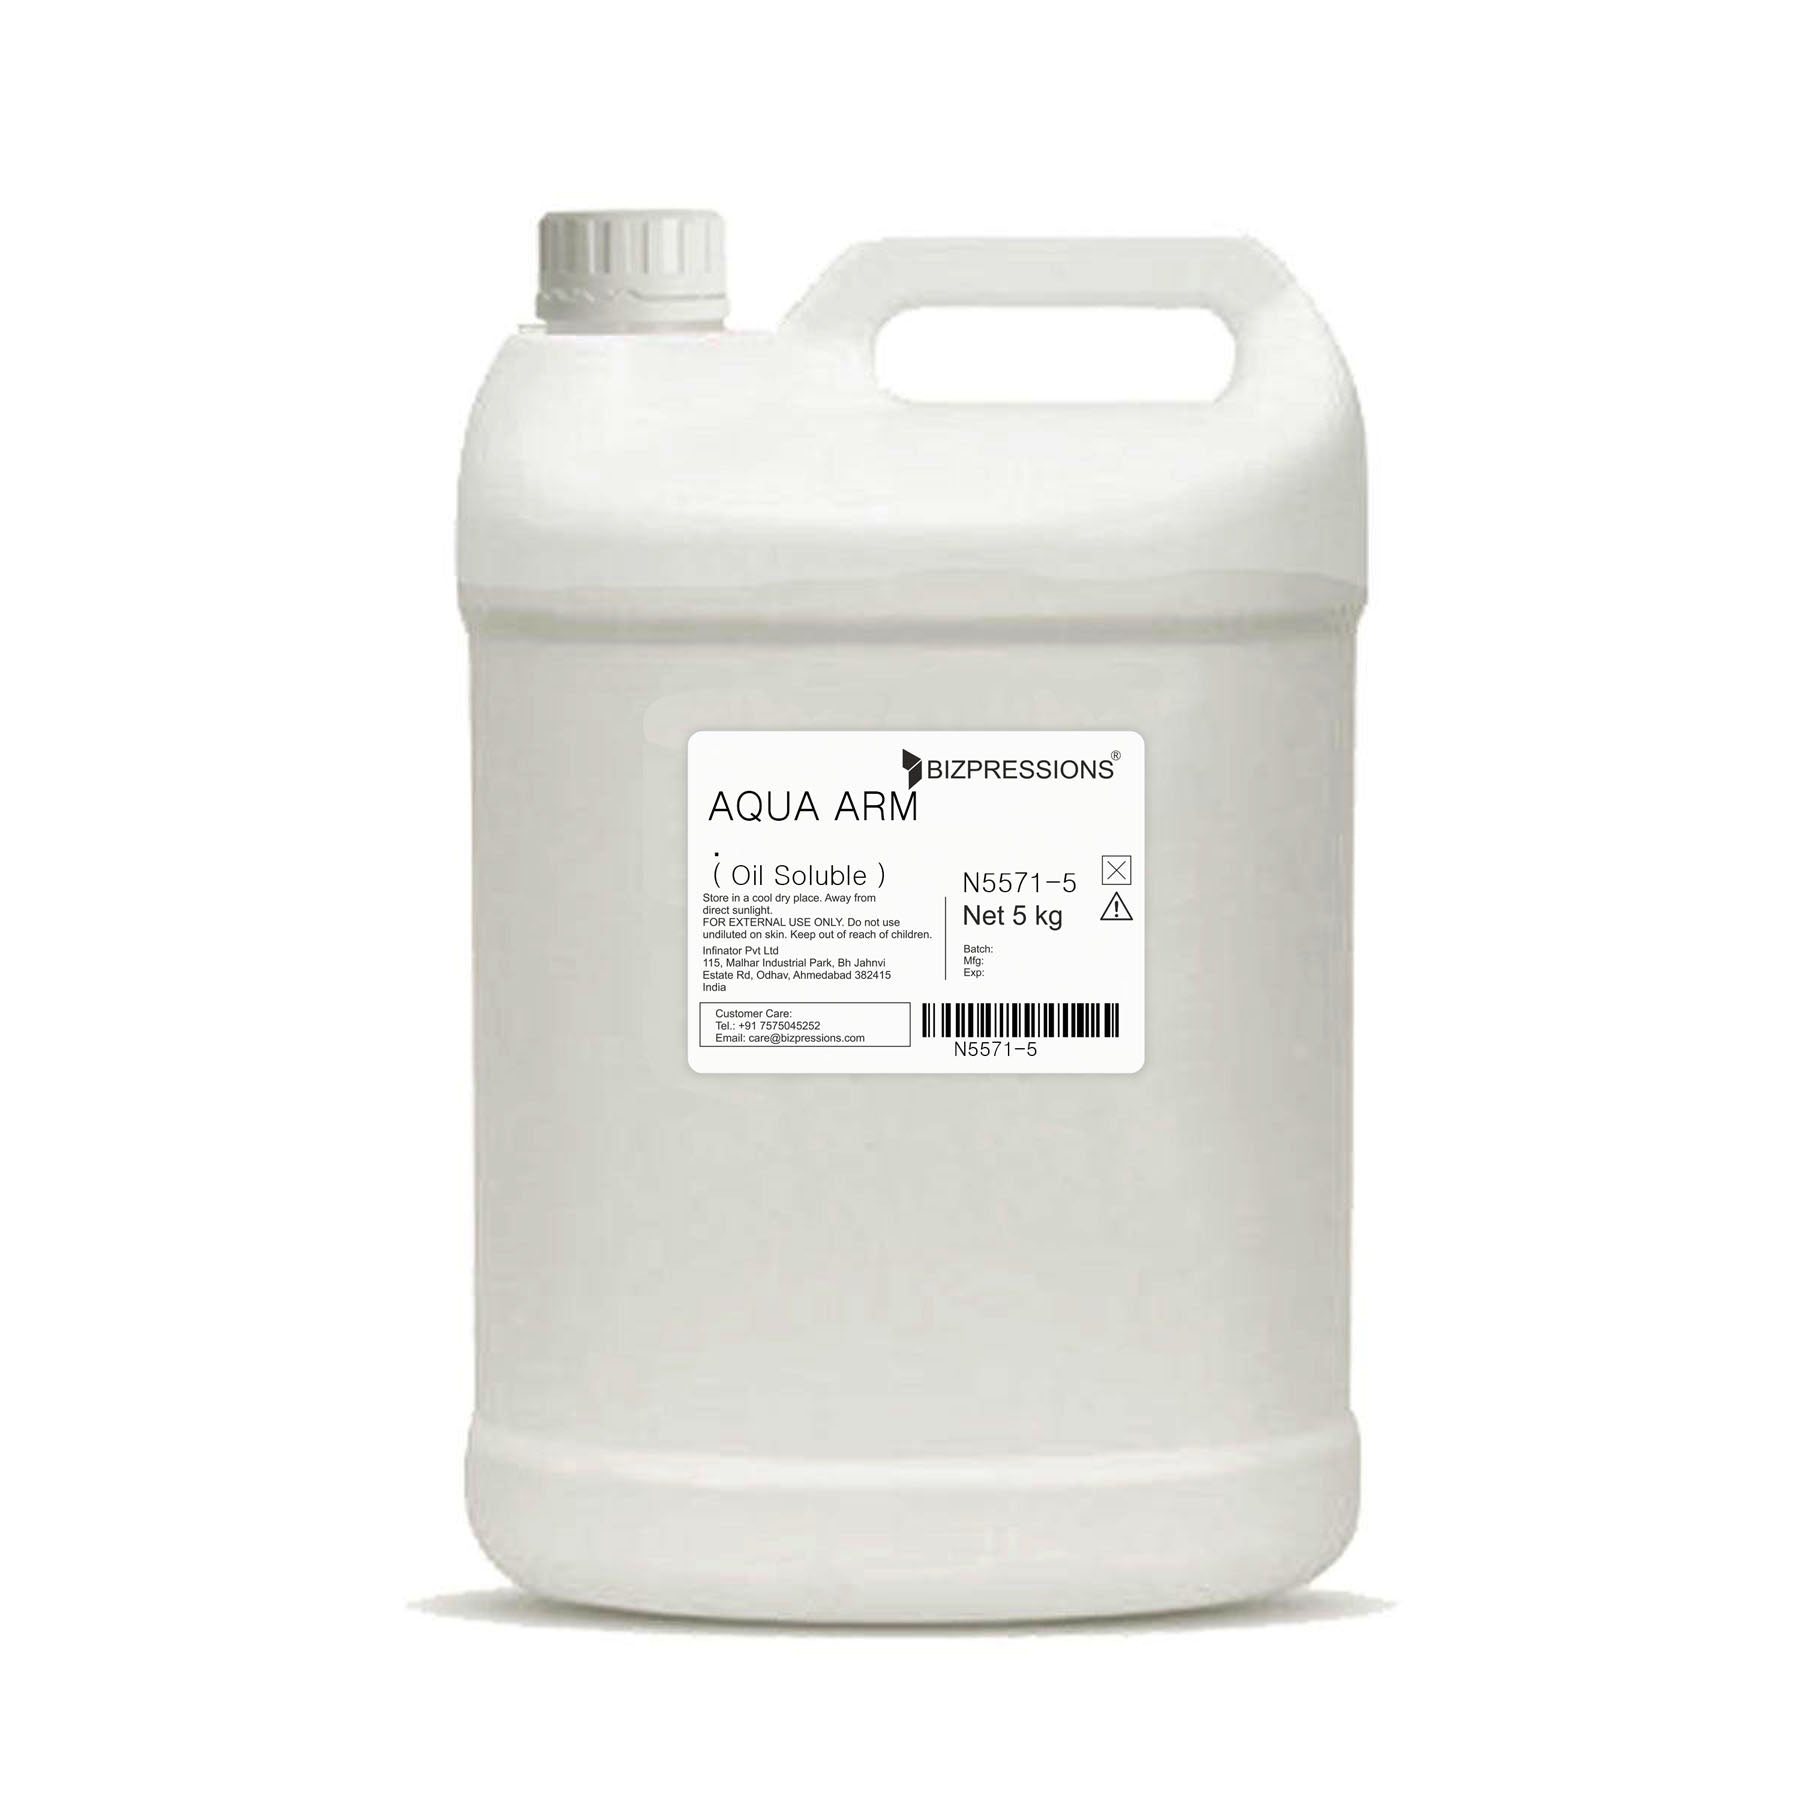 AQUA ARM - Fragrance ( Oil Soluble ) - 5 kg